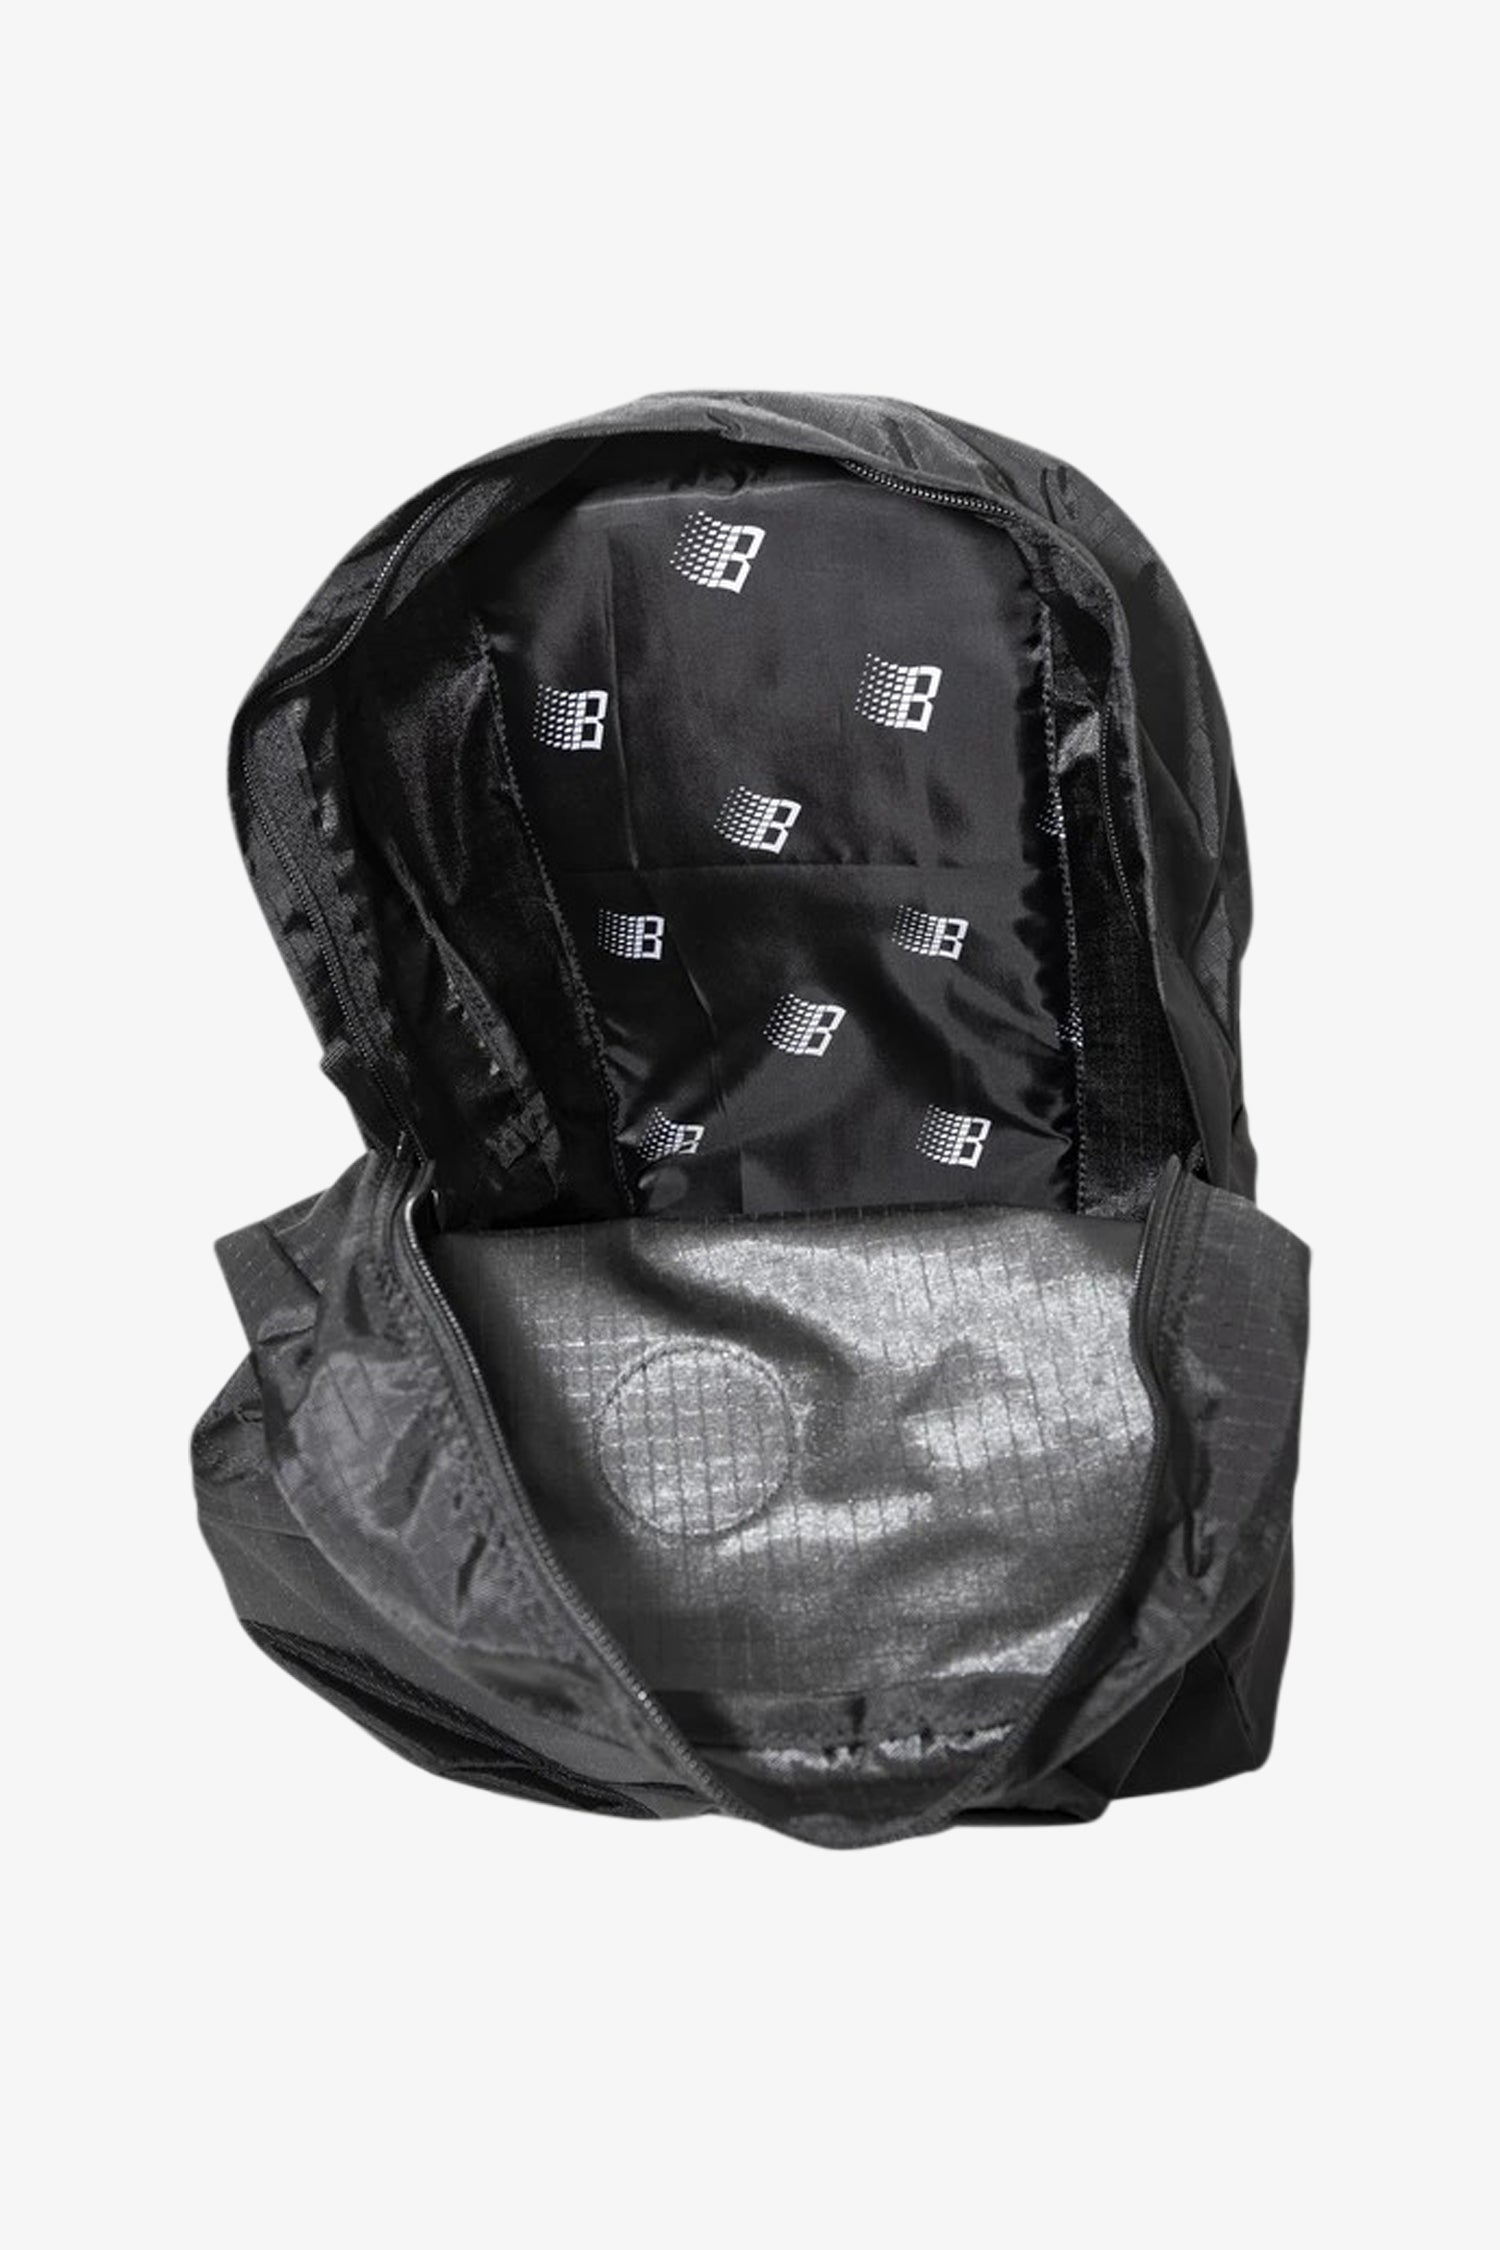 Selectshop FRAME - BRONZE 56K Ripstop Backpack all-accessories Dubai